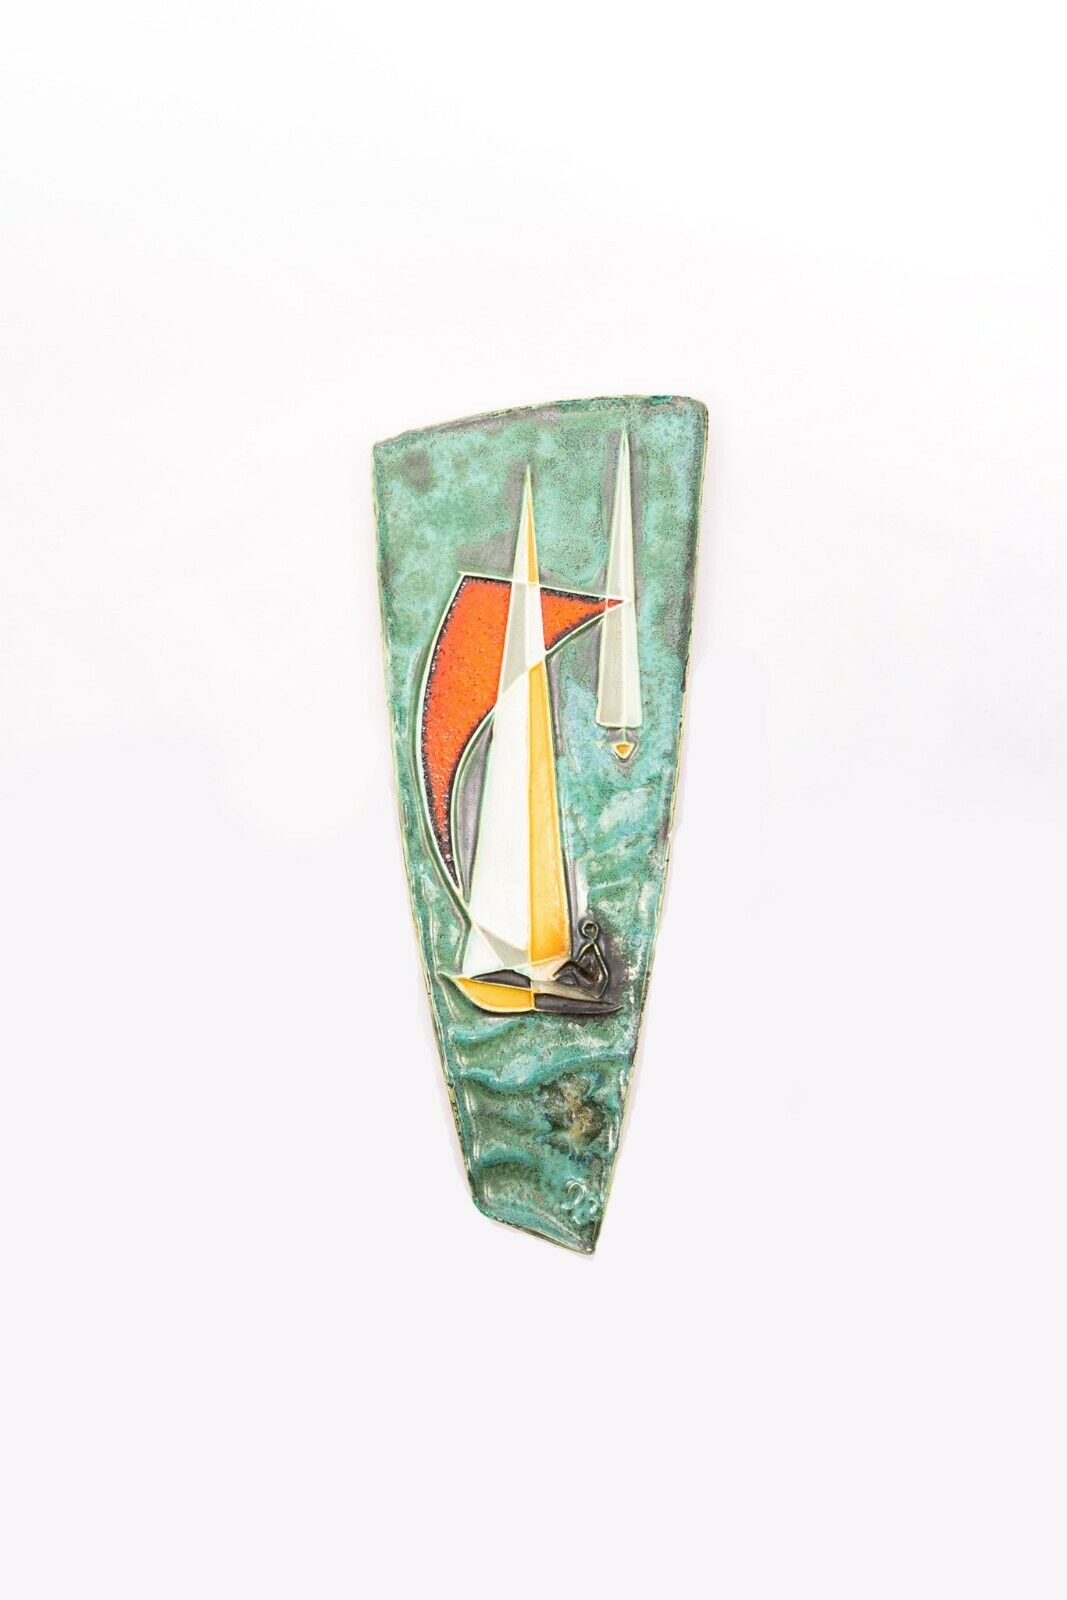 Schäffenacker ceramic wall plaque sailboat motif vintage item